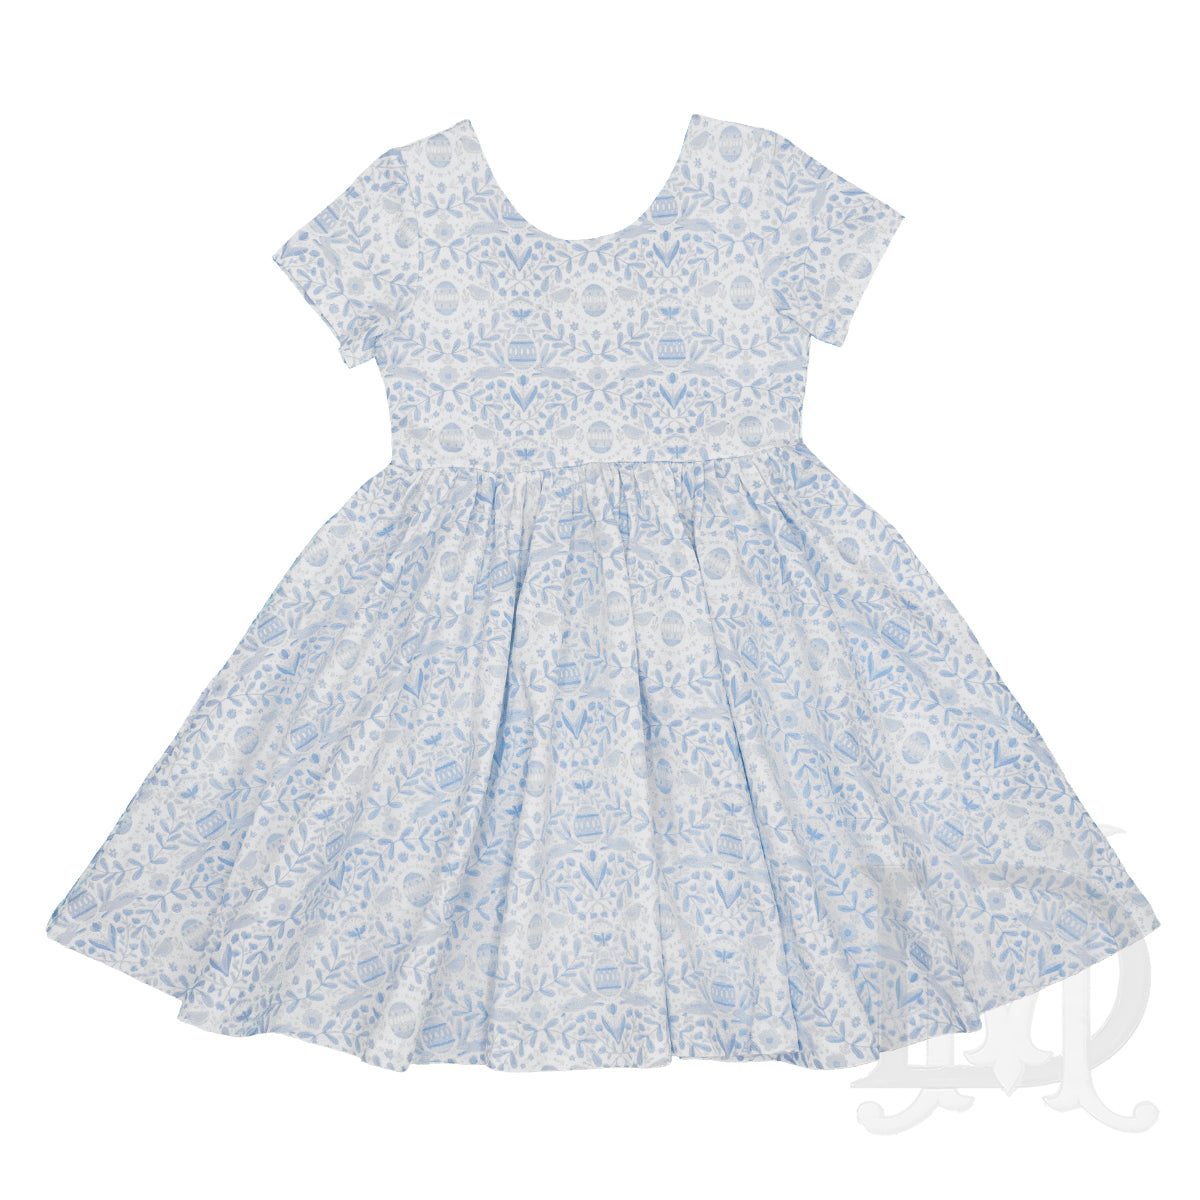 Toddler Girl's Blue Bunnies Dress Ollie Jay Little Girl Easter Dress